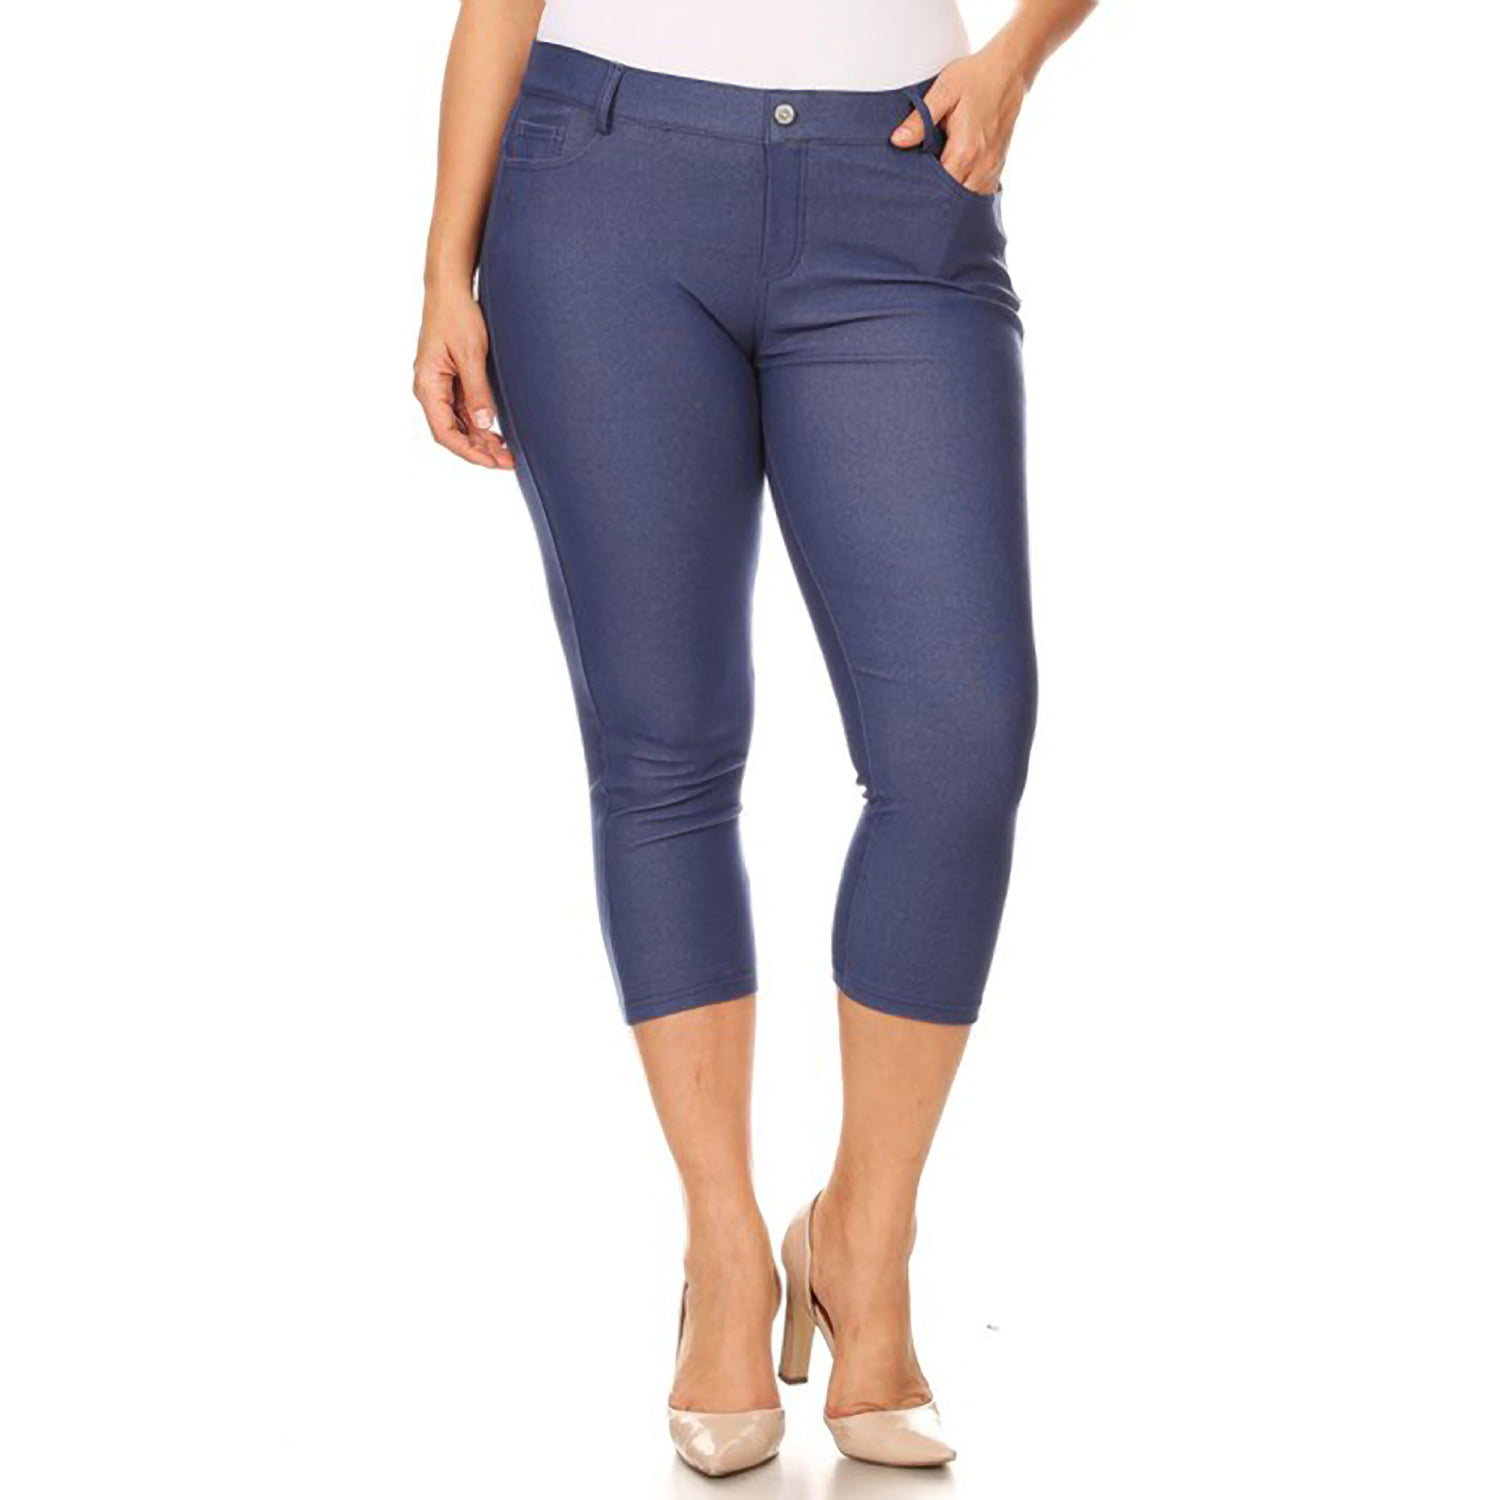 Women's Classic Solid Capri Jeggings (Plus Size) - Walmart.com